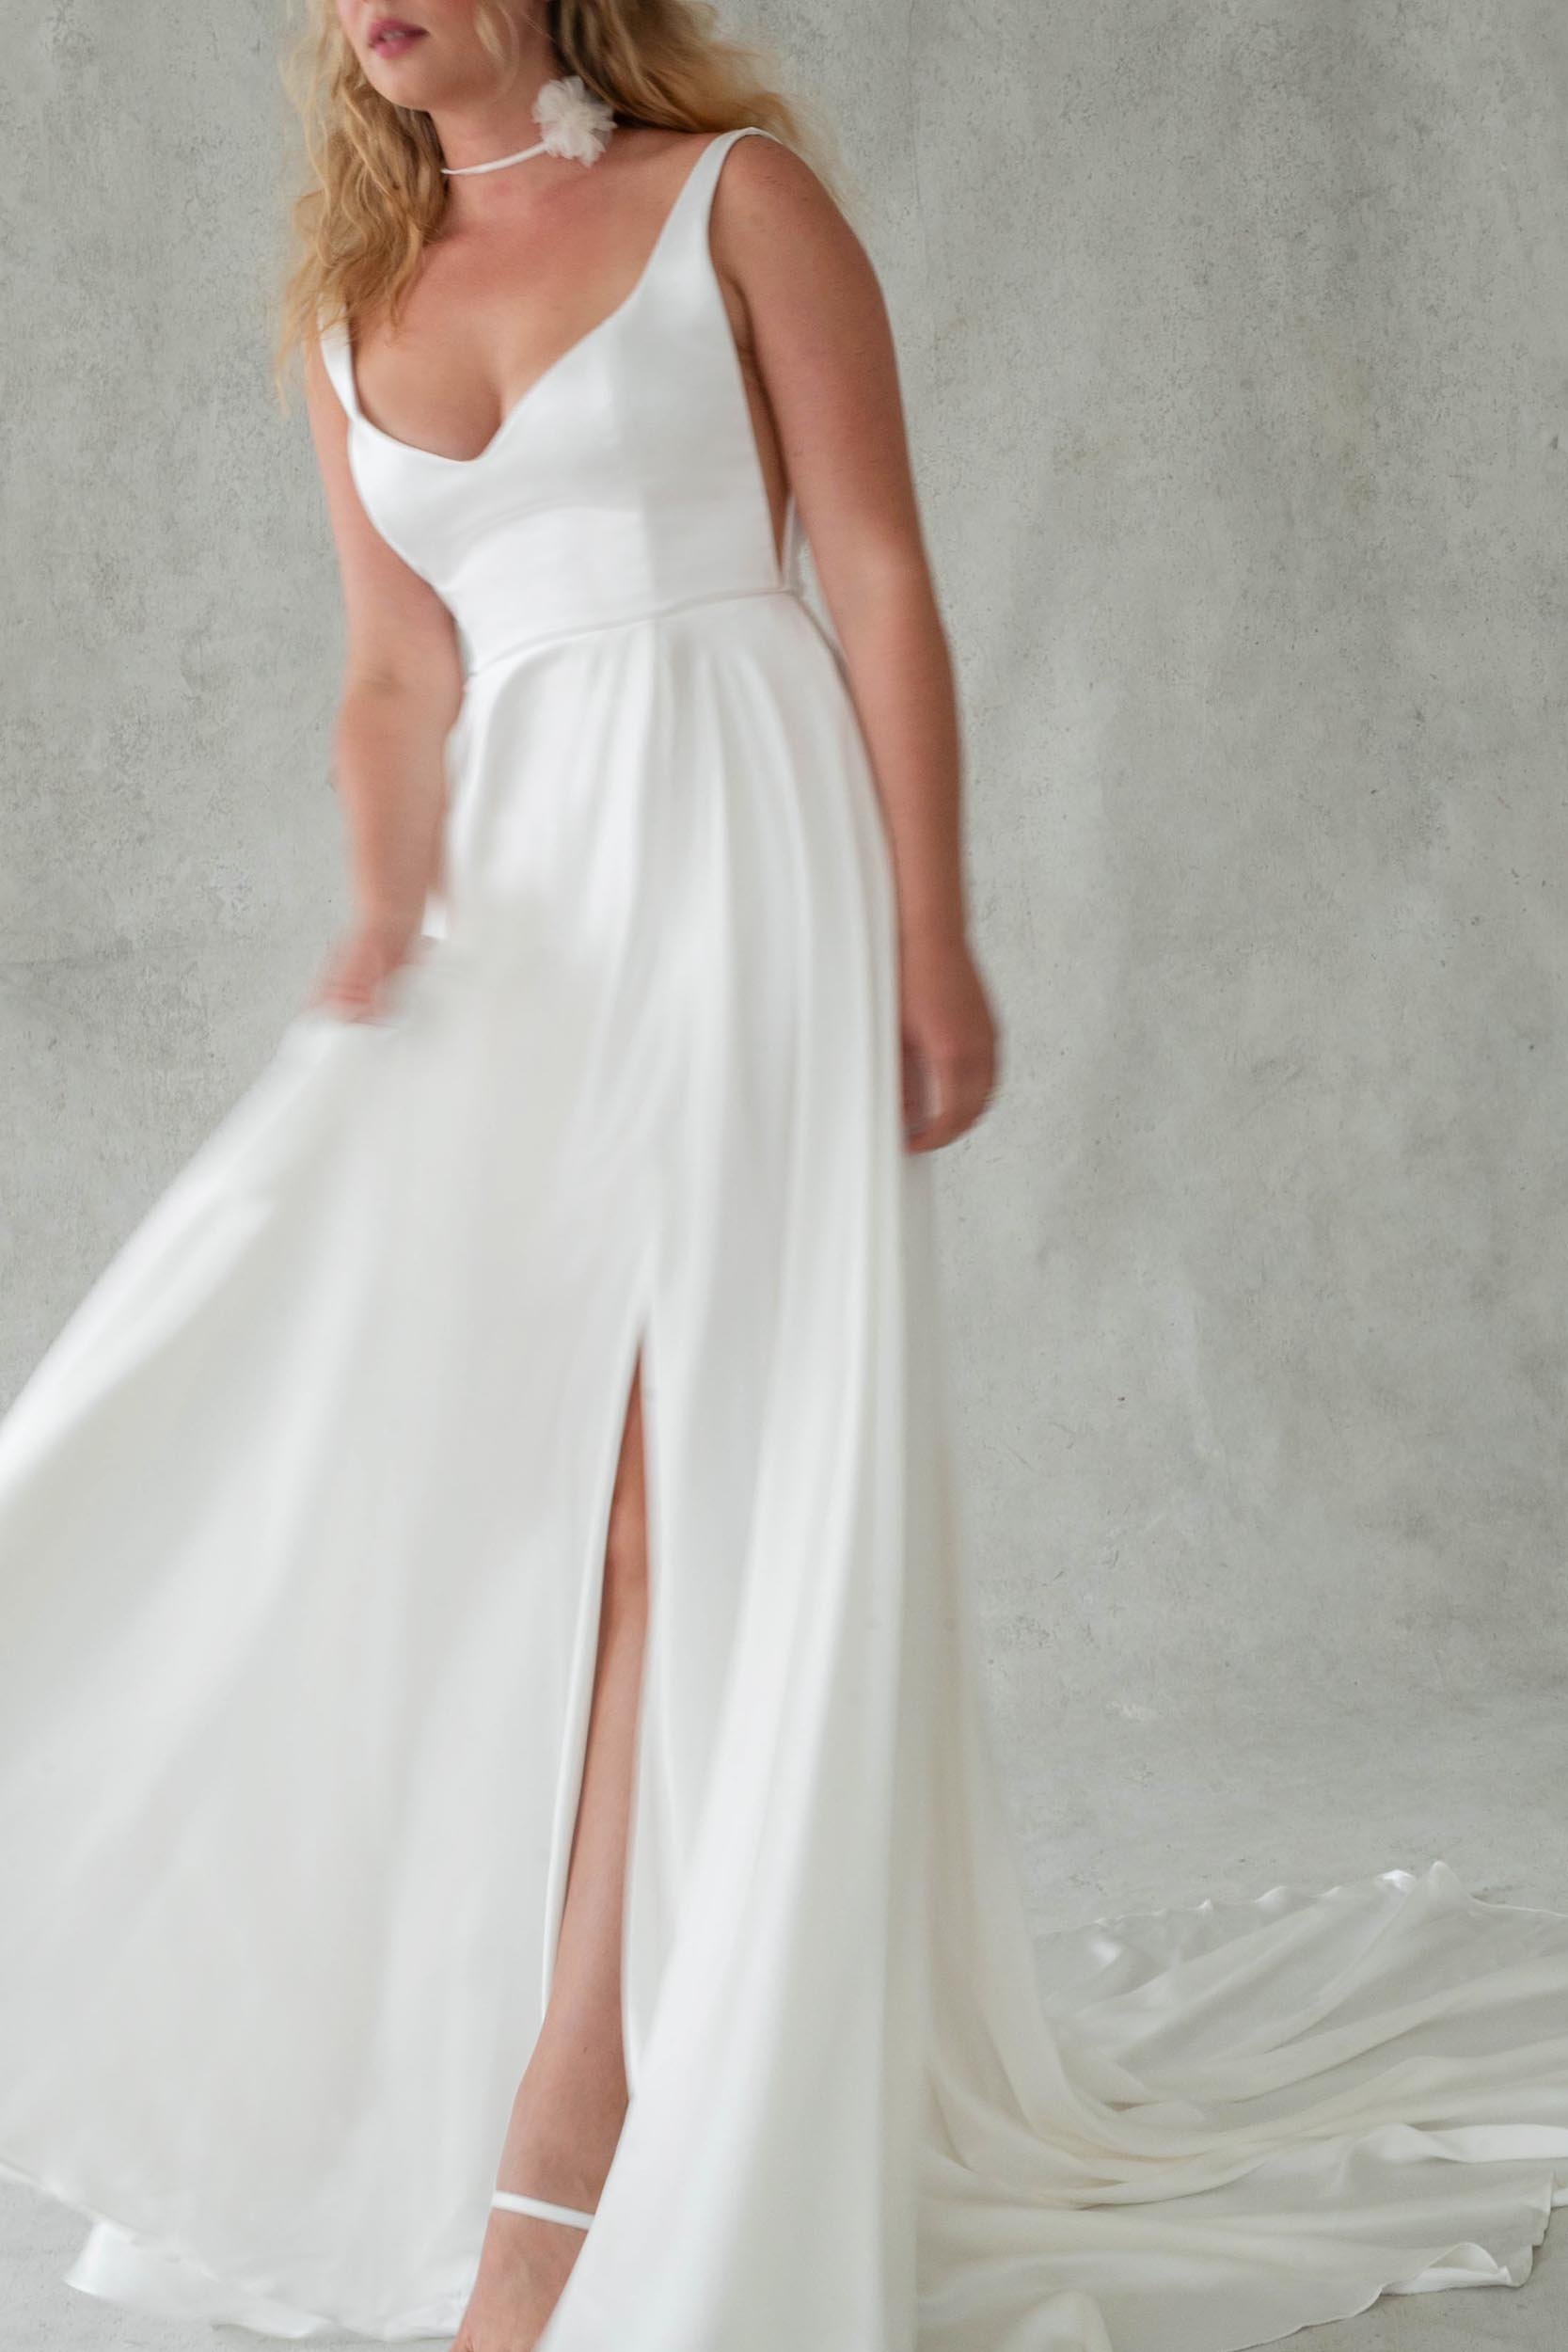 magnolia-alexandra-grecco-wedding-dress-4.jpg